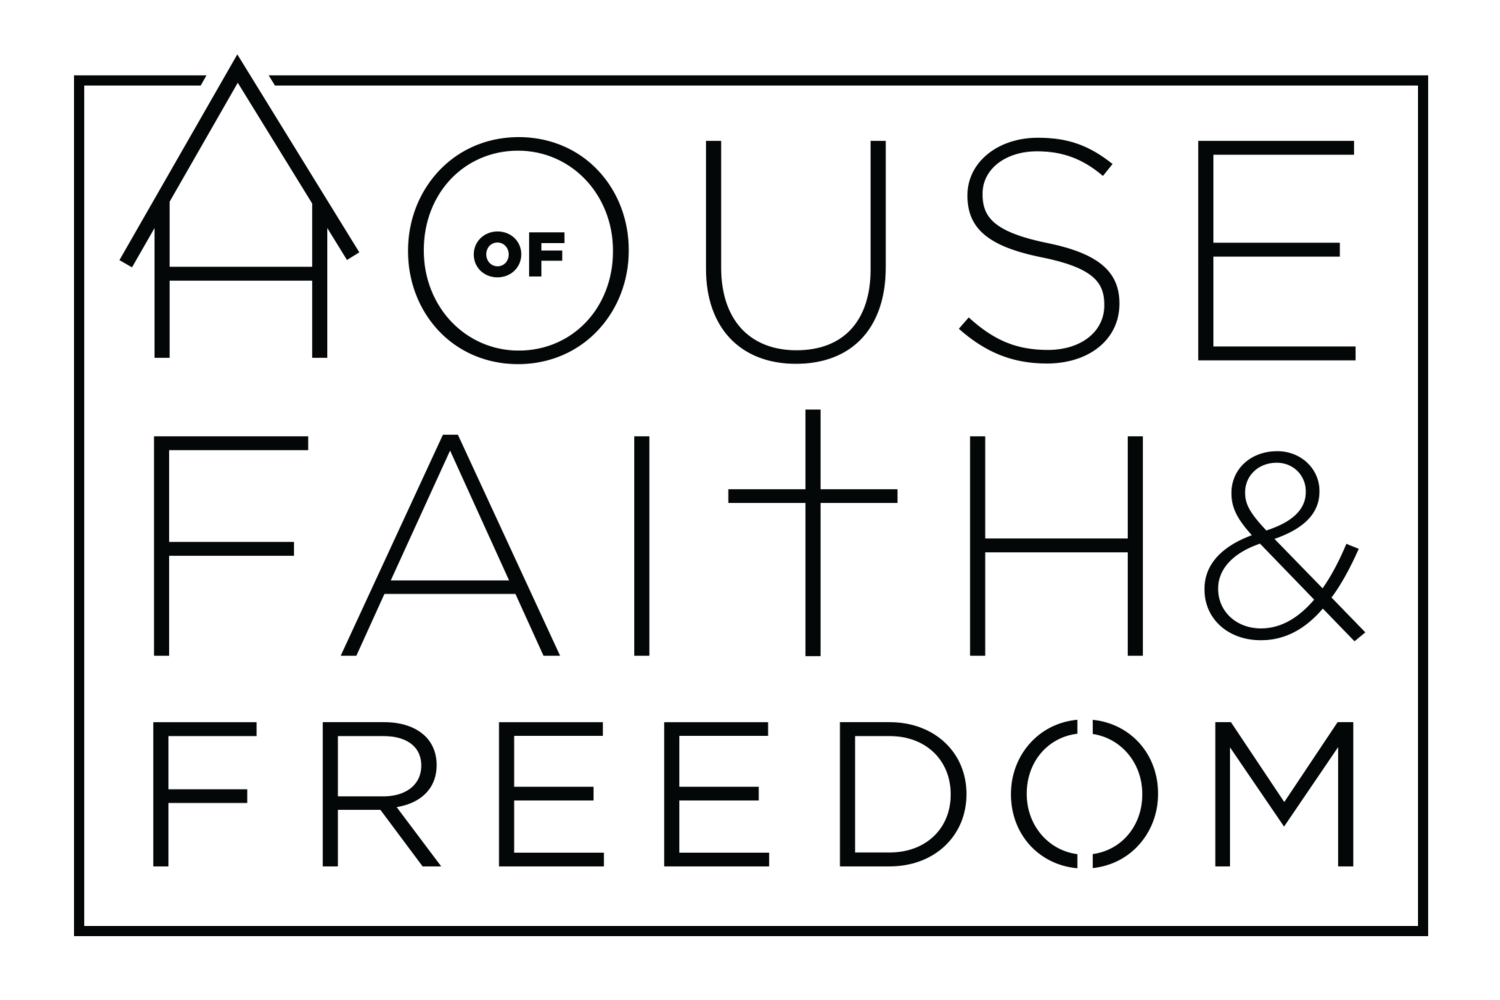 House of Faith and Freedom - Church domestic abuse training